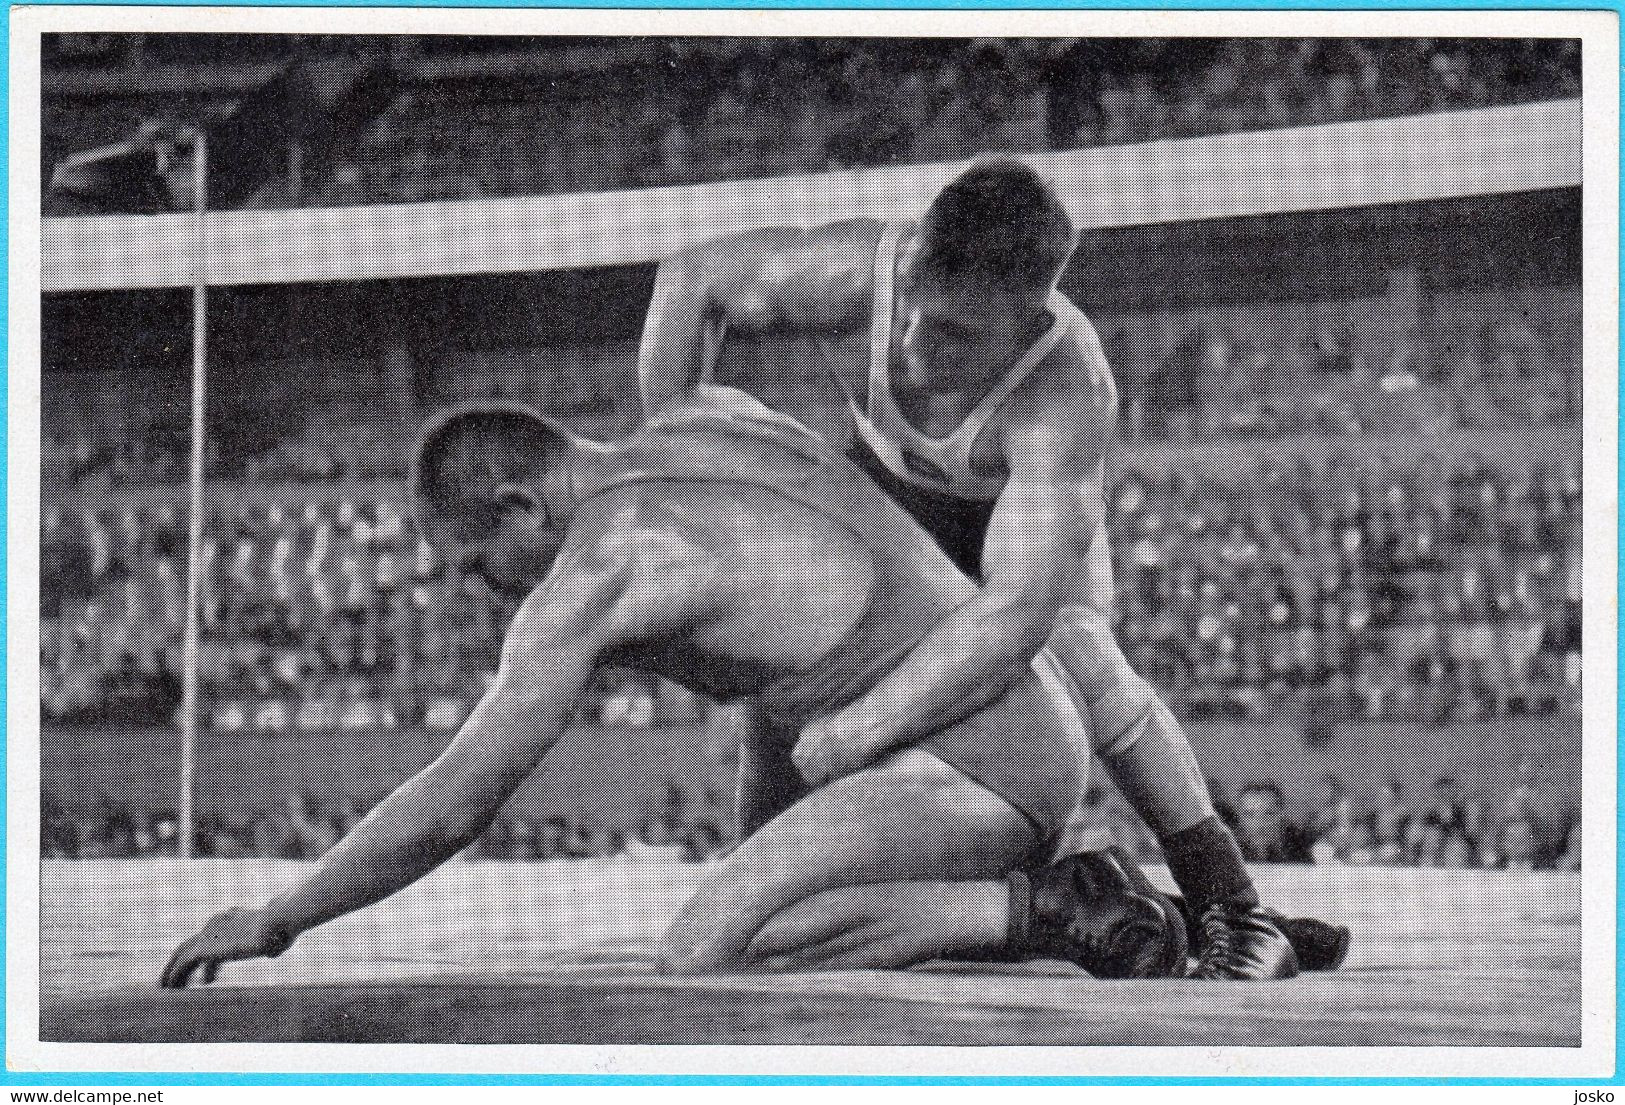 WRESTLING - SCHAFER - Olympic Games 1936 Berlin - Silver Medal * German Old Card * Lutte Ringen Lotta Lucha Luta Livre - Trading Cards